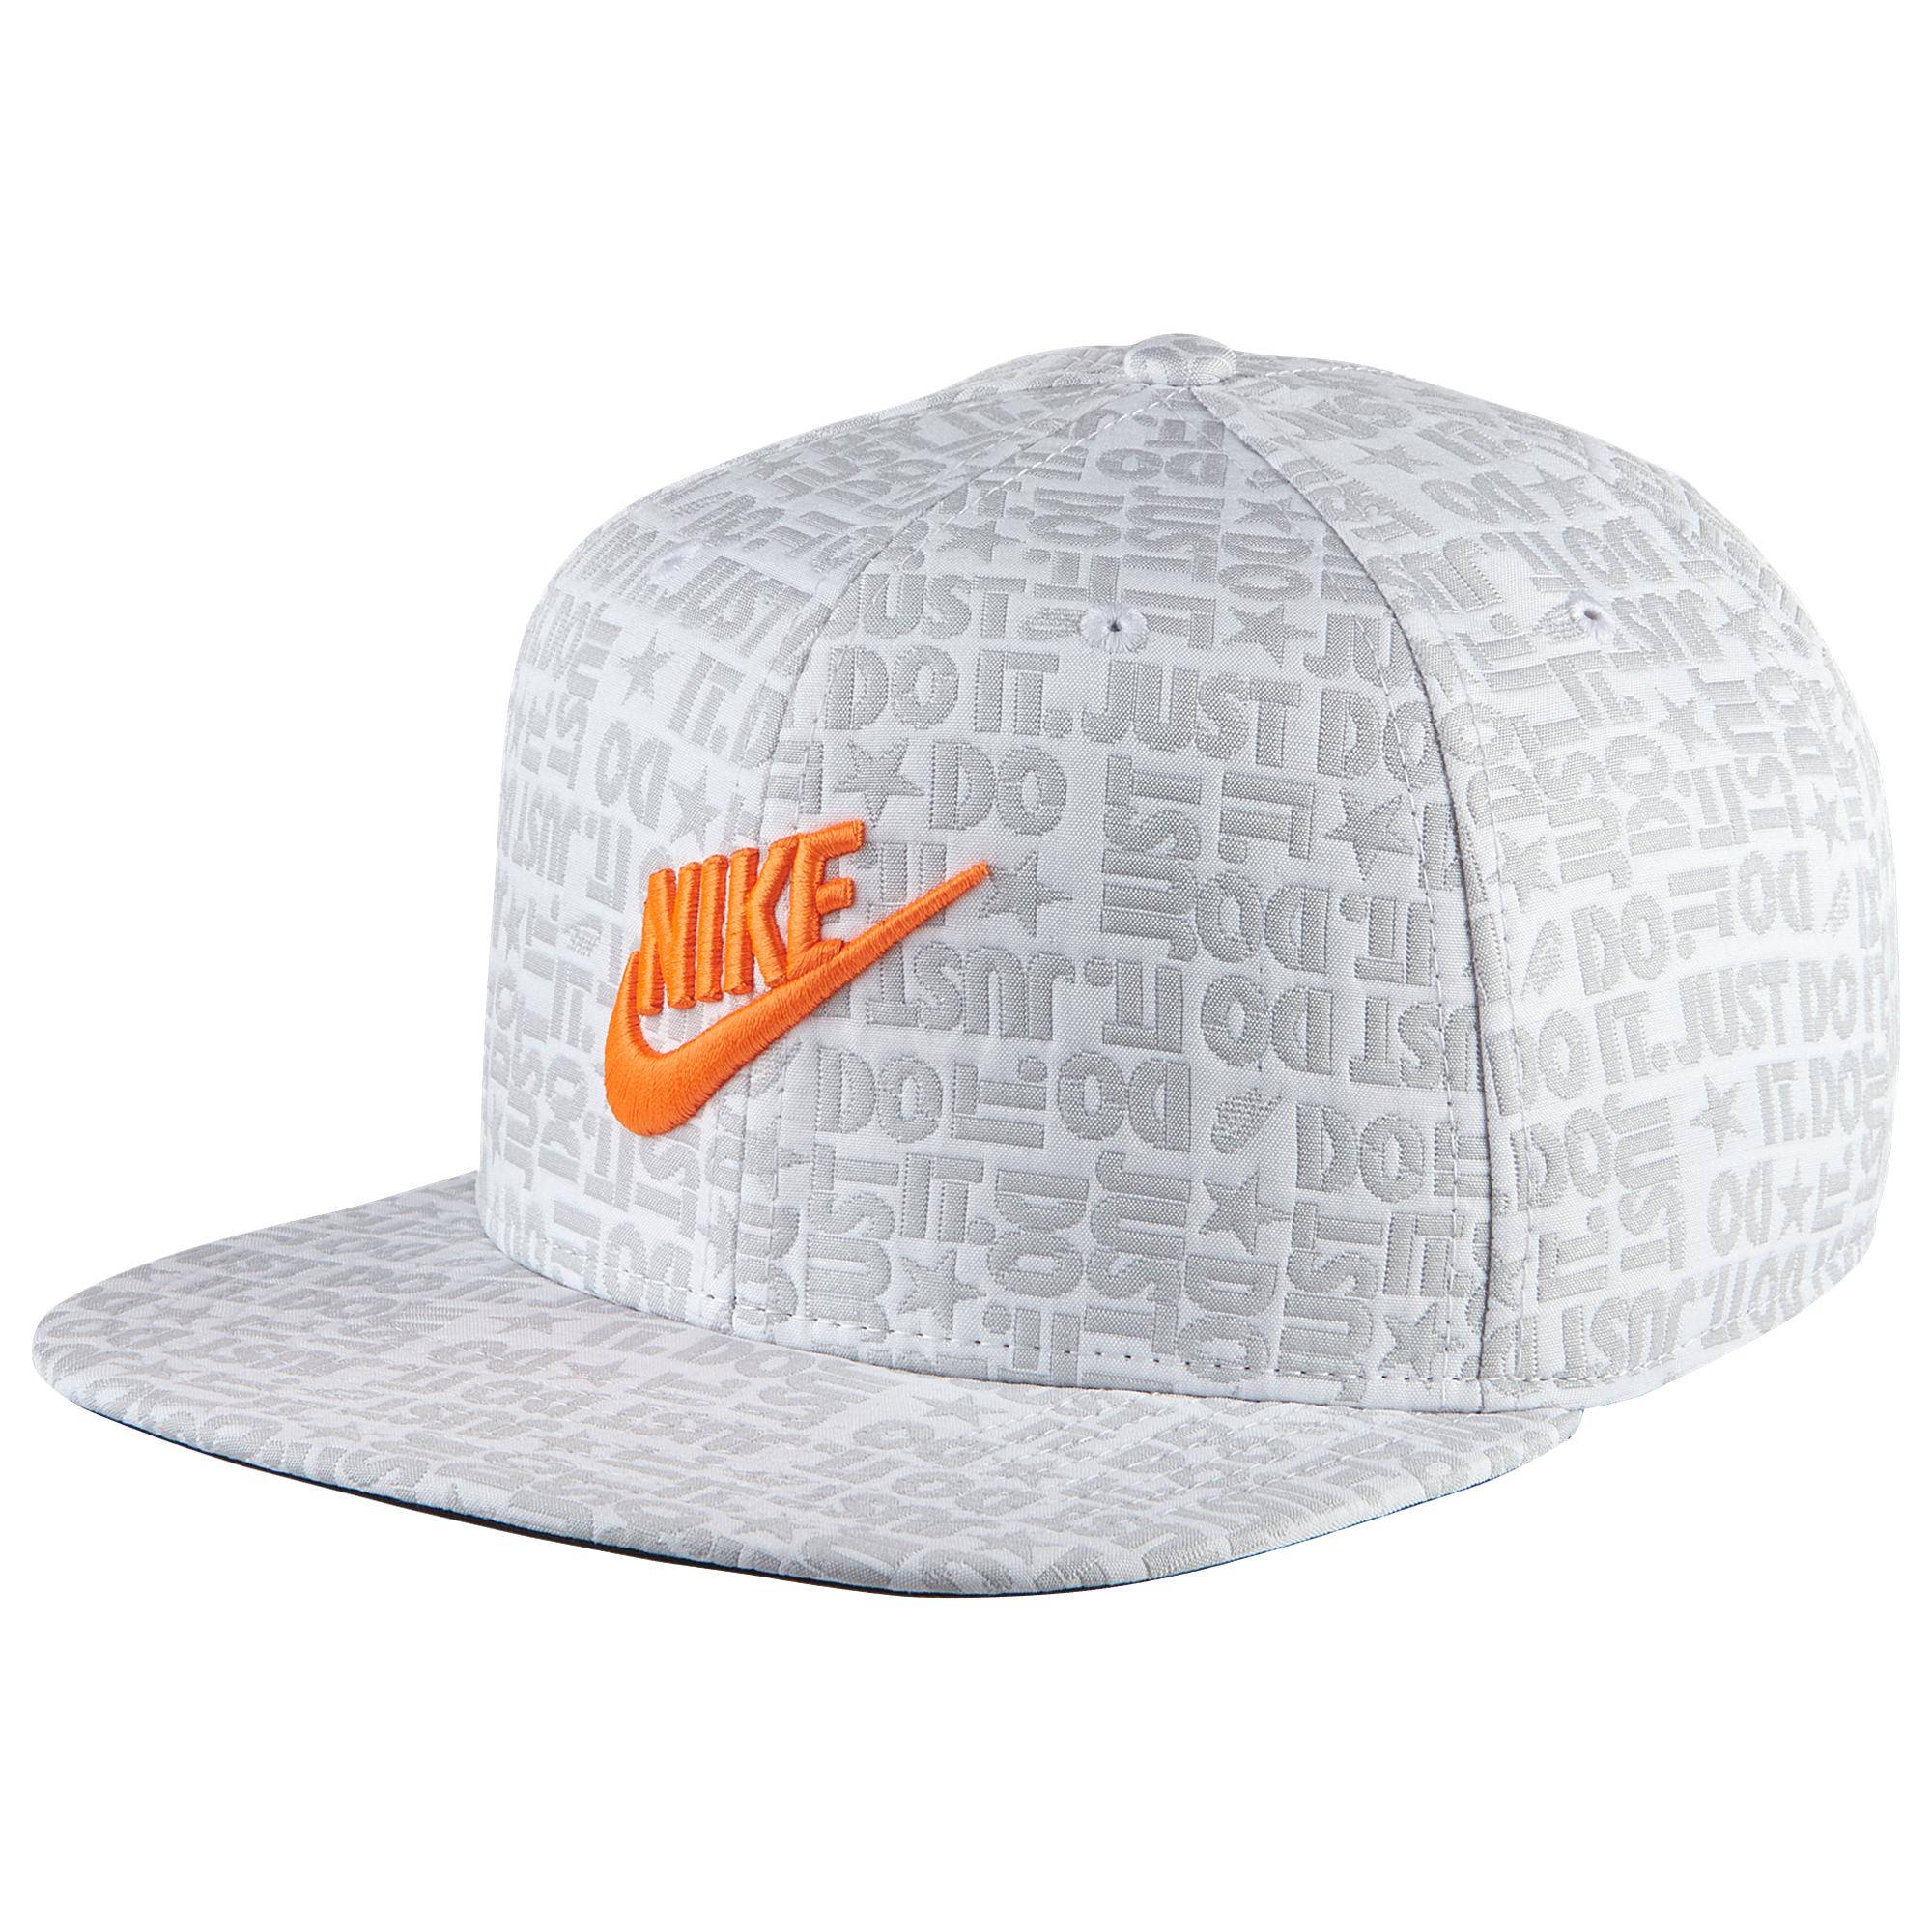 white and orange nike hat